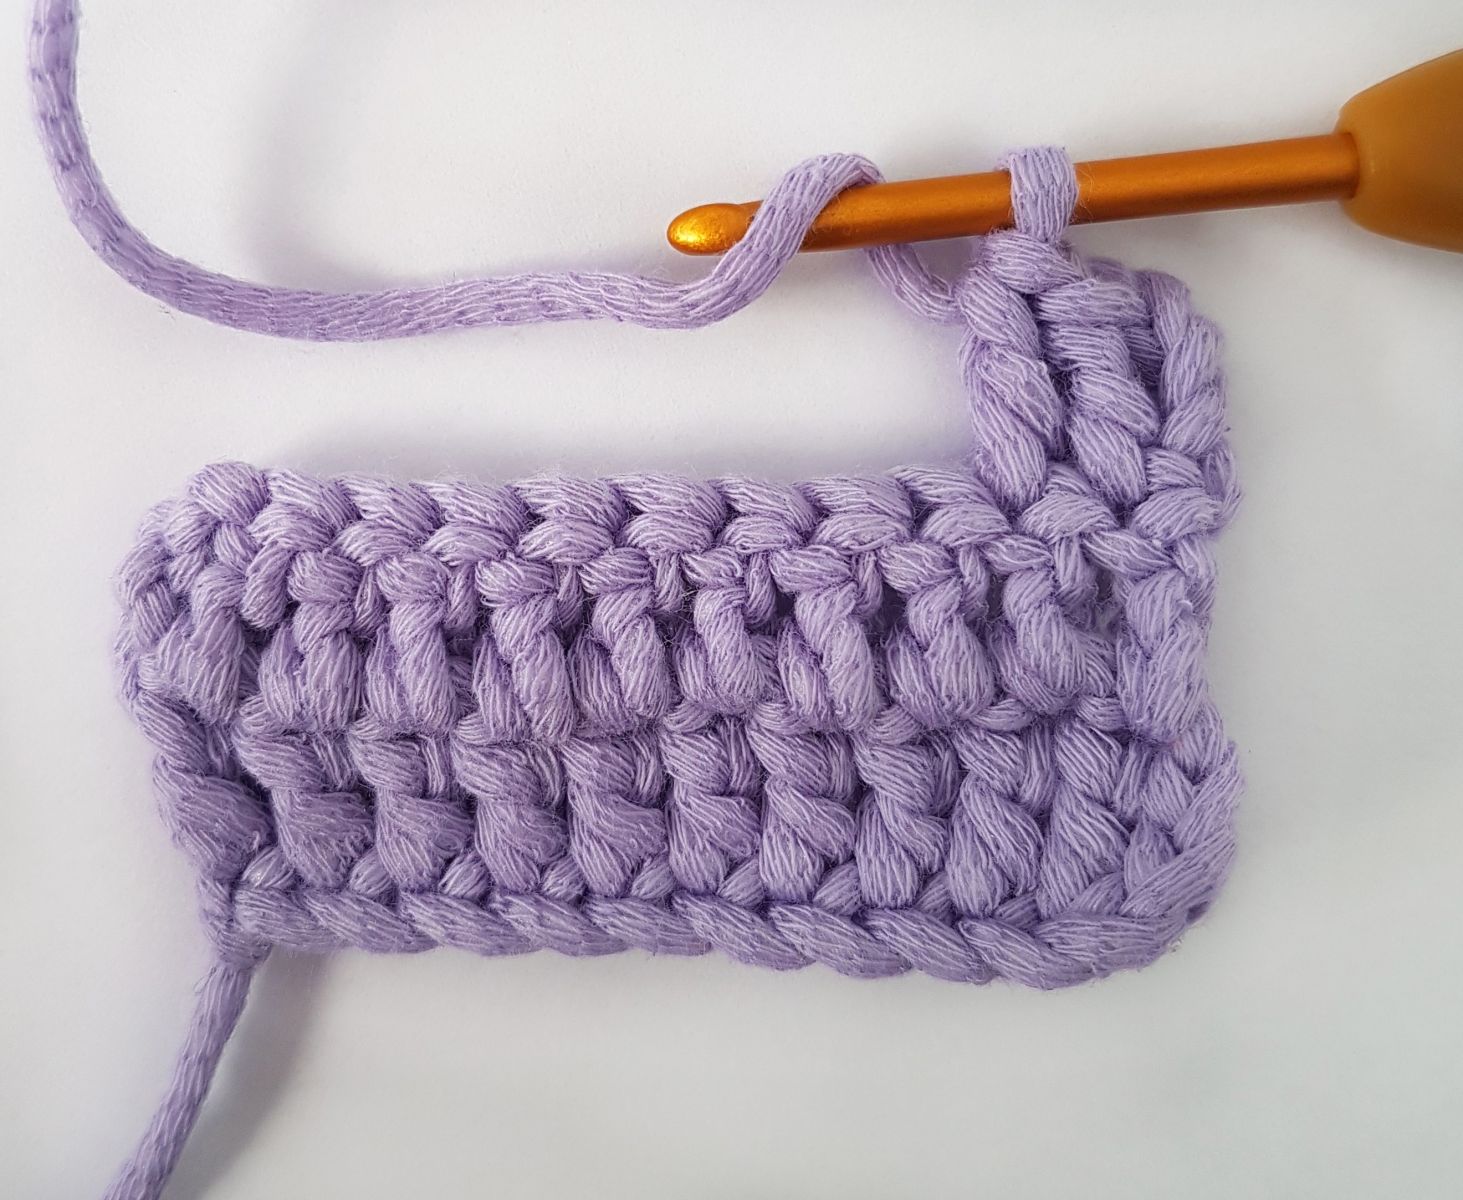 Crochet double crochet (half double crochet UK) together = Decrease